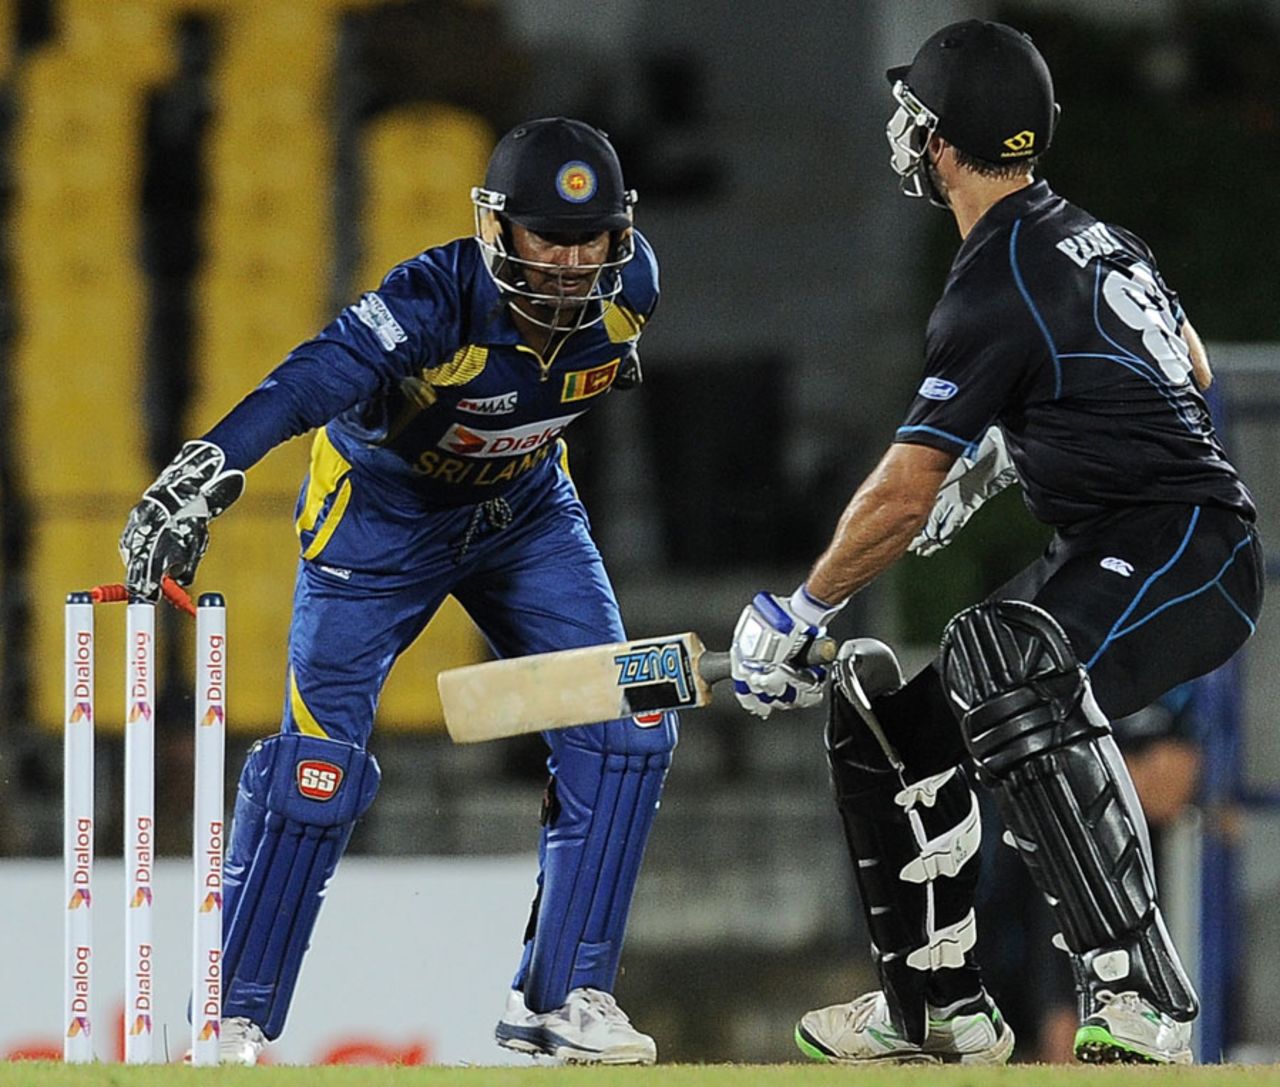 Kumar Sangakkara stumps Grant Elliot, Sri Lanka v New Zealand, 2nd ODI, Hambantota, November 12, 2013